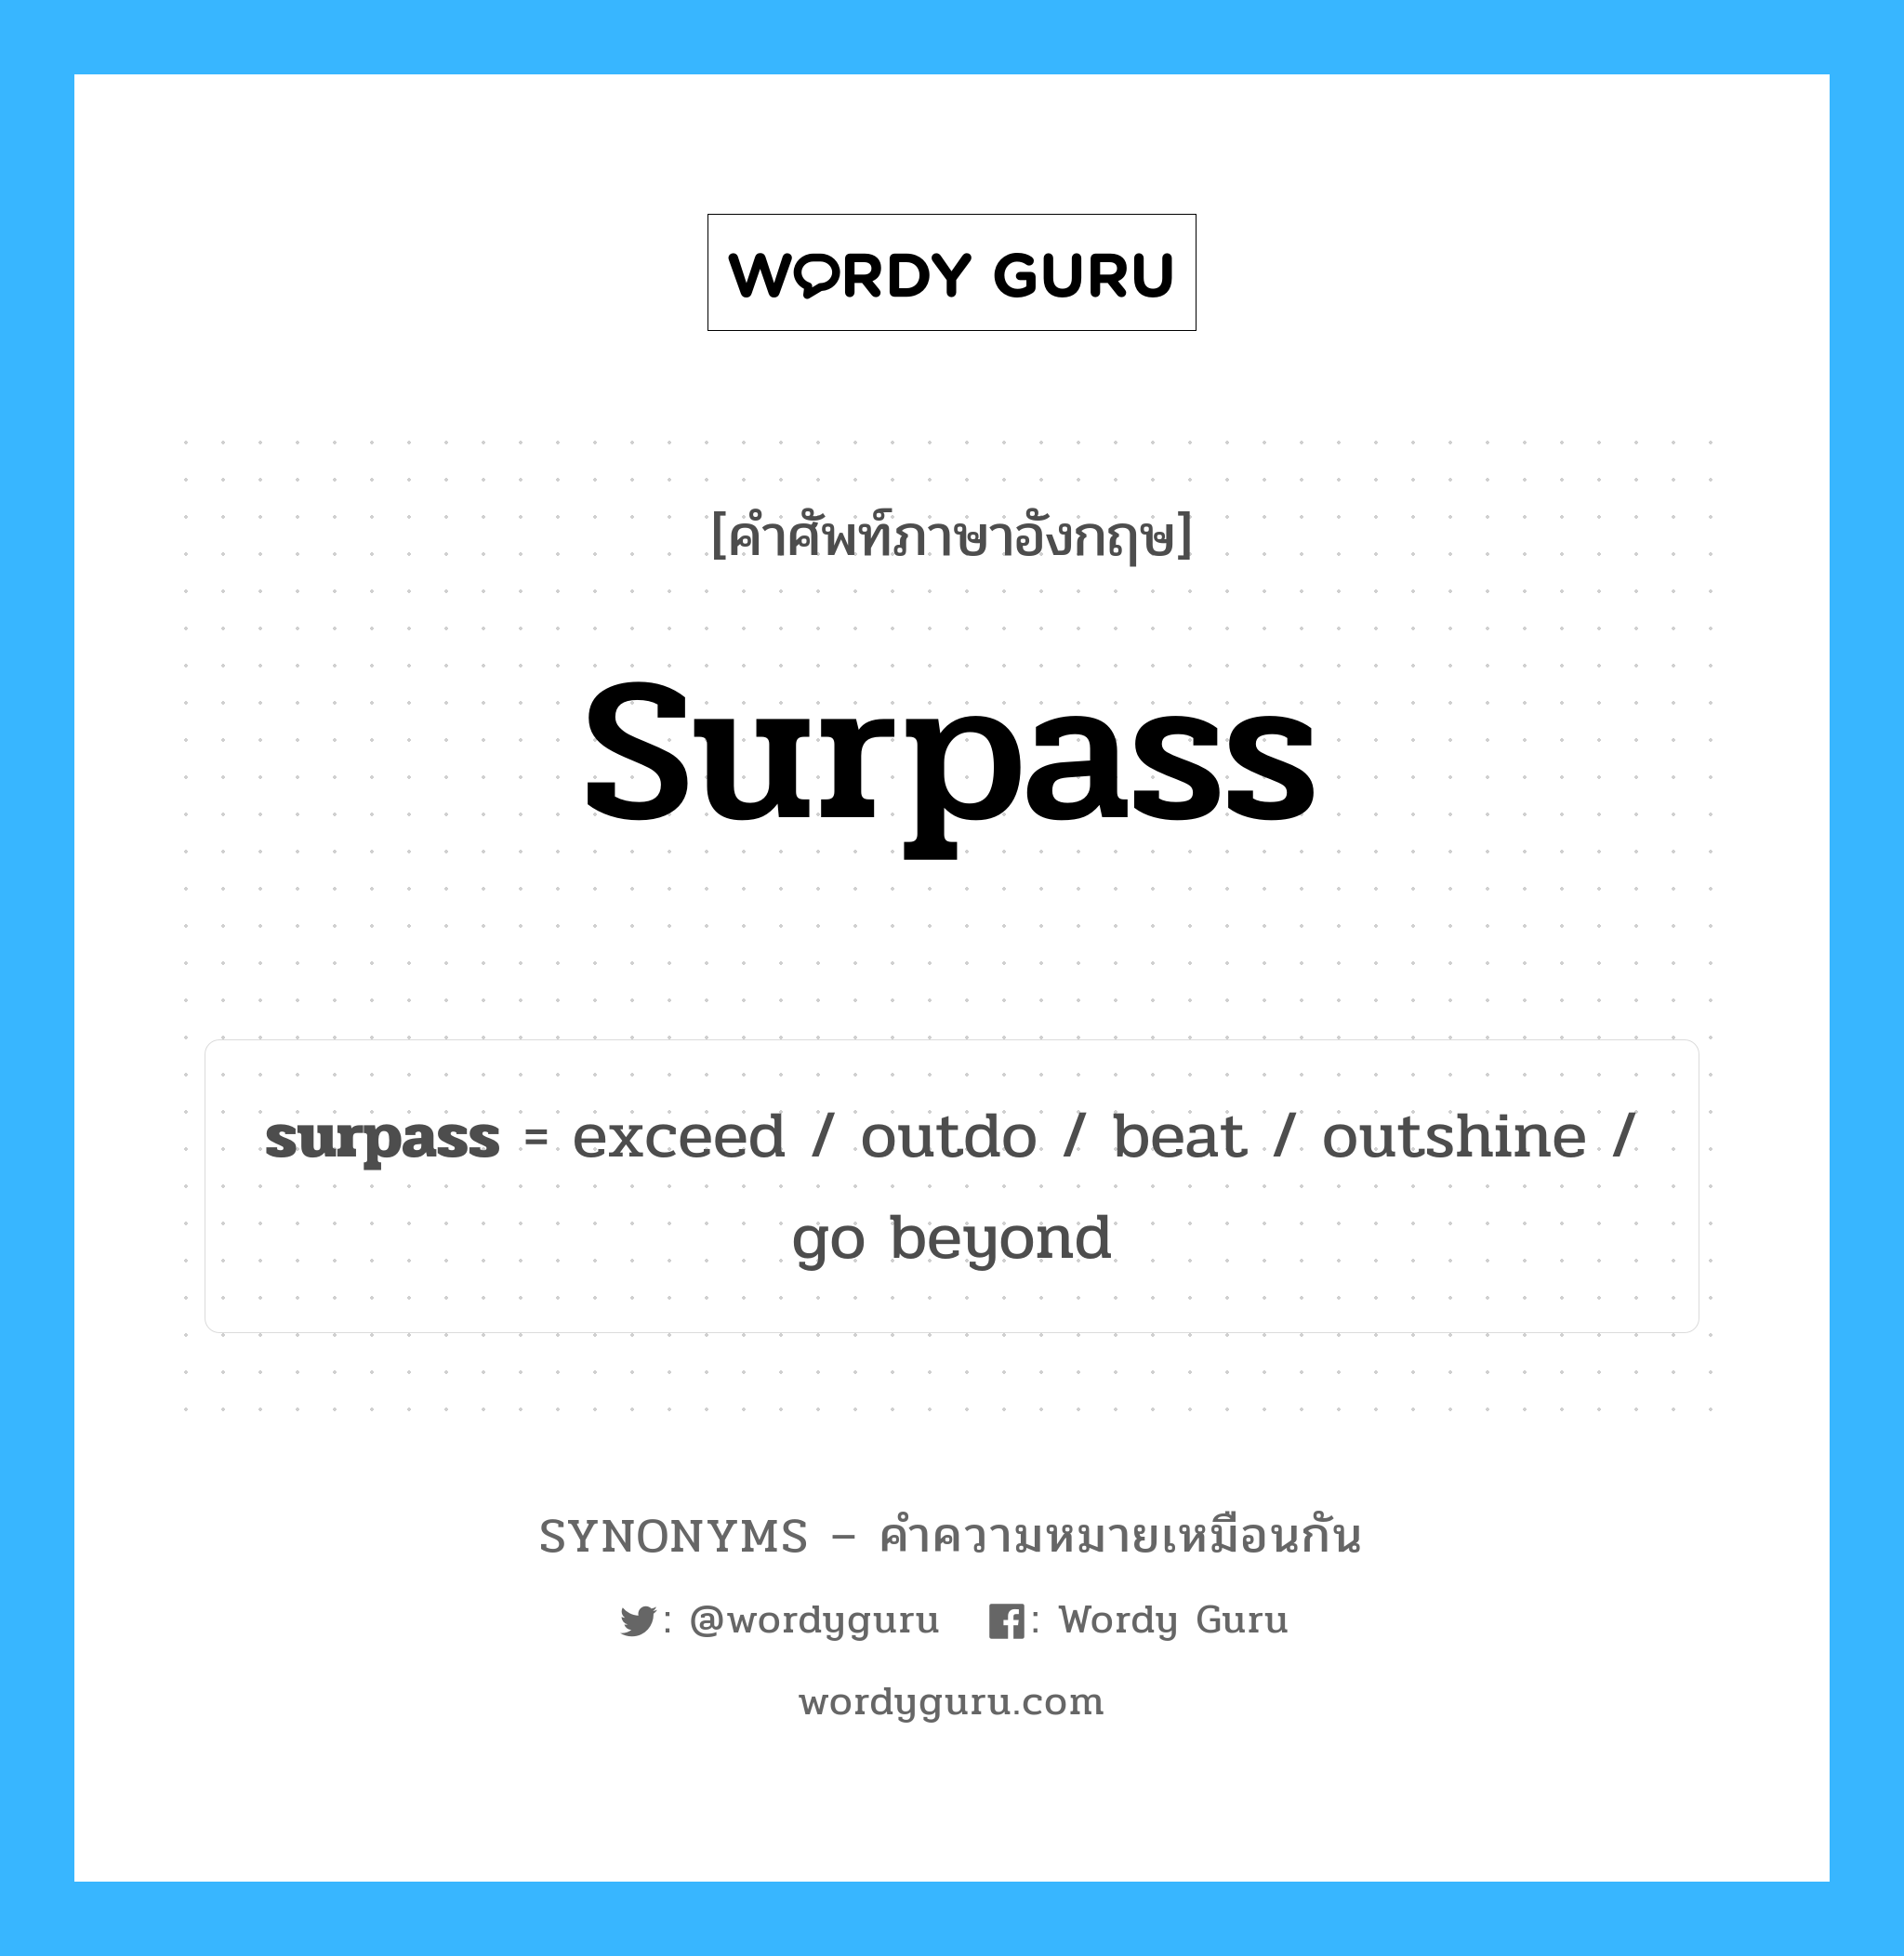 exceed เป็นหนึ่งใน surpass และมีคำอื่น ๆ อีกดังนี้, คำศัพท์ภาษาอังกฤษ exceed ความหมายคล้ายกันกับ surpass แปลว่า เกิน หมวด surpass